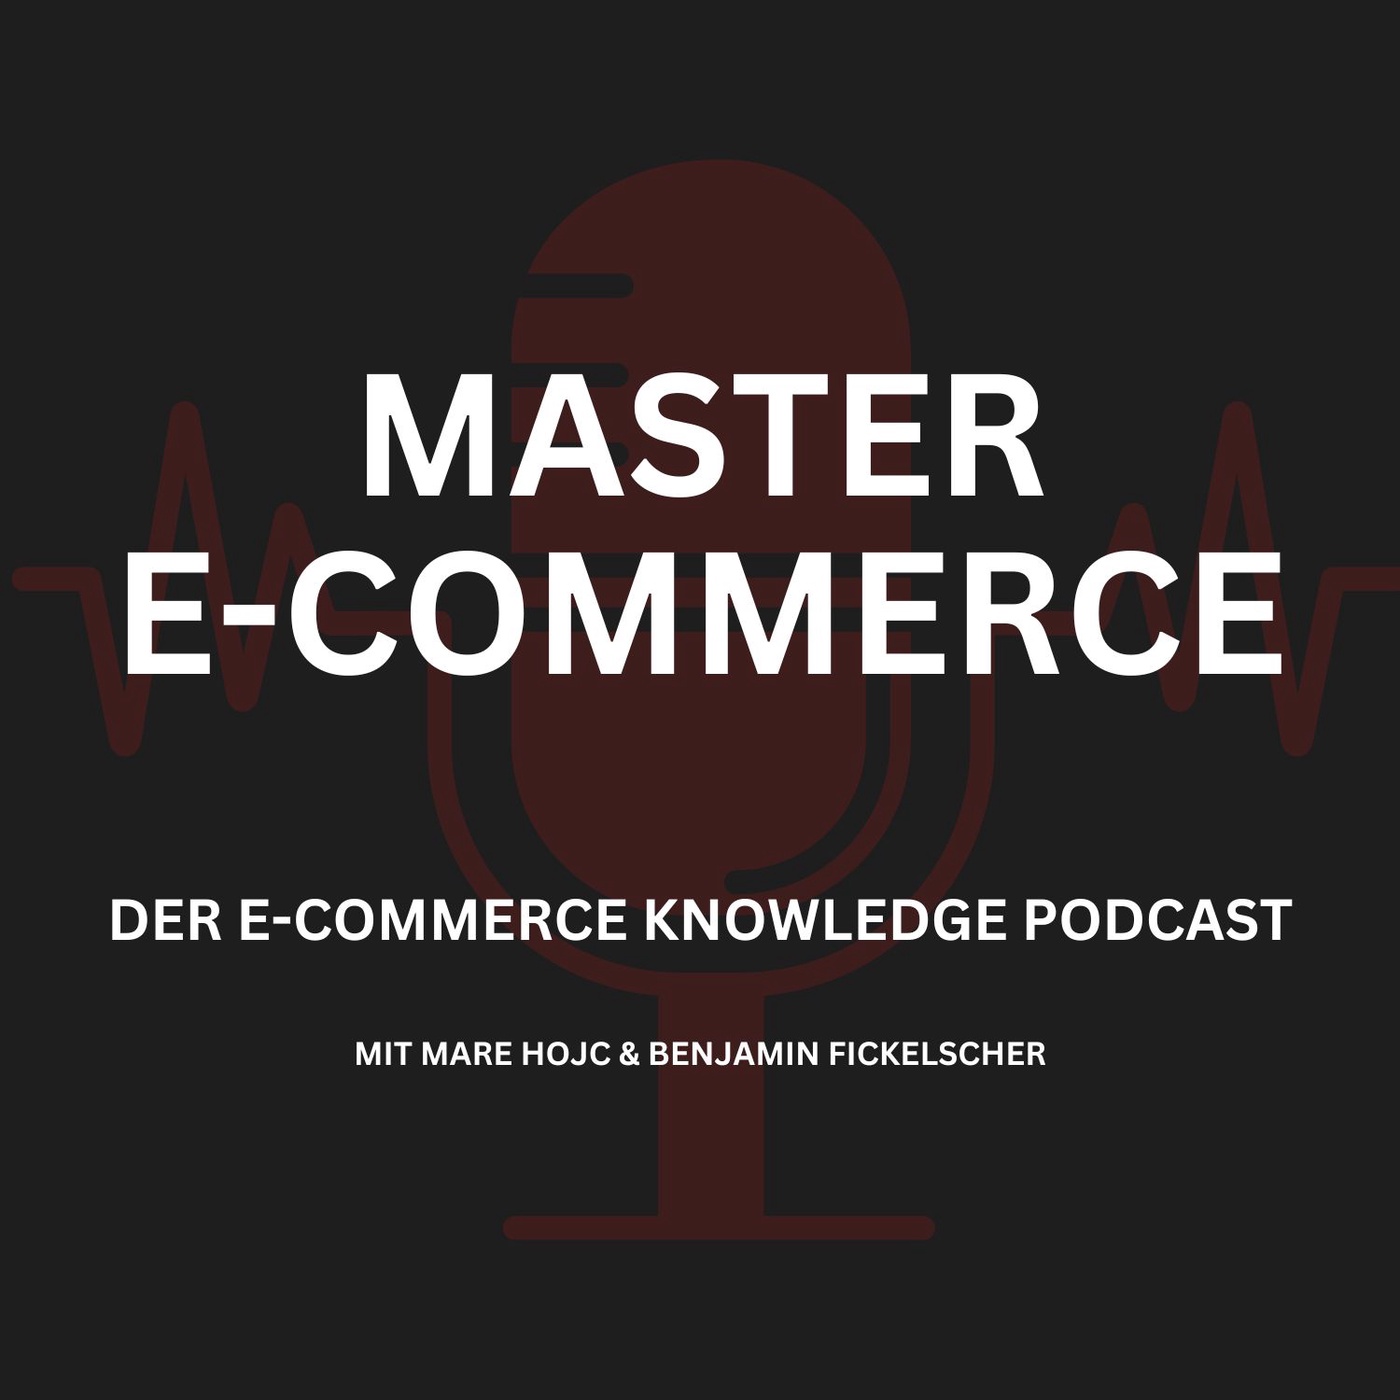 Master E-Commerce | Der E-Commerce Knowledge Podcast